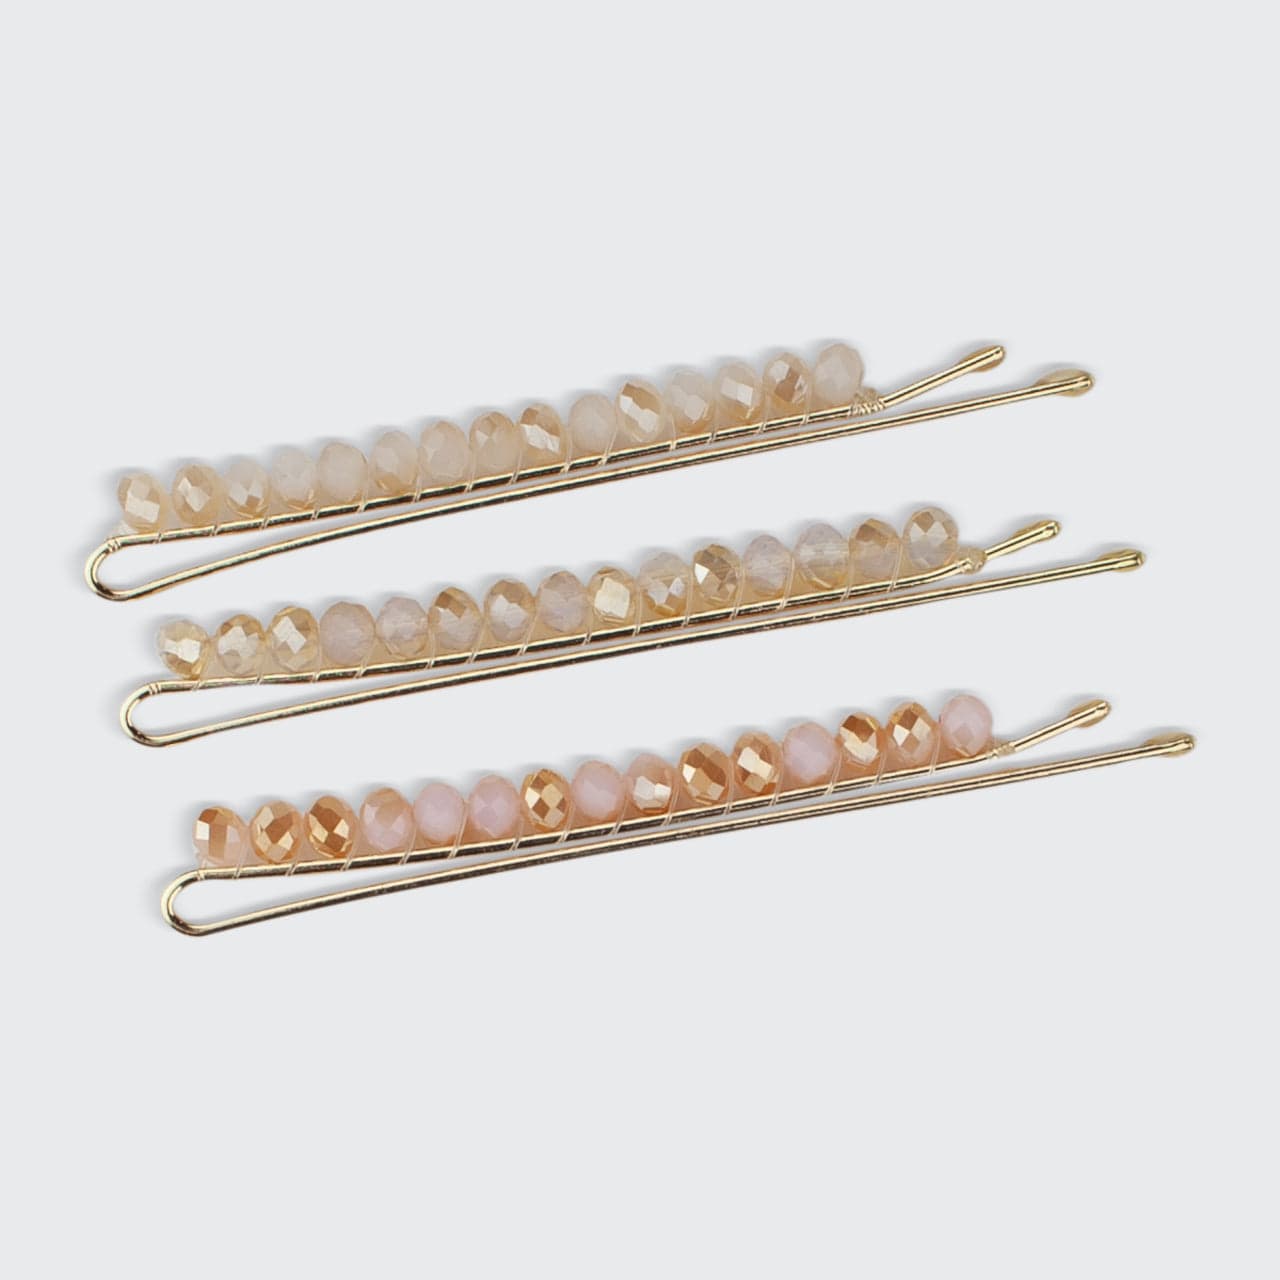 Perlenbesetzte Haarnadeln aus Metall – Blush/Mauve